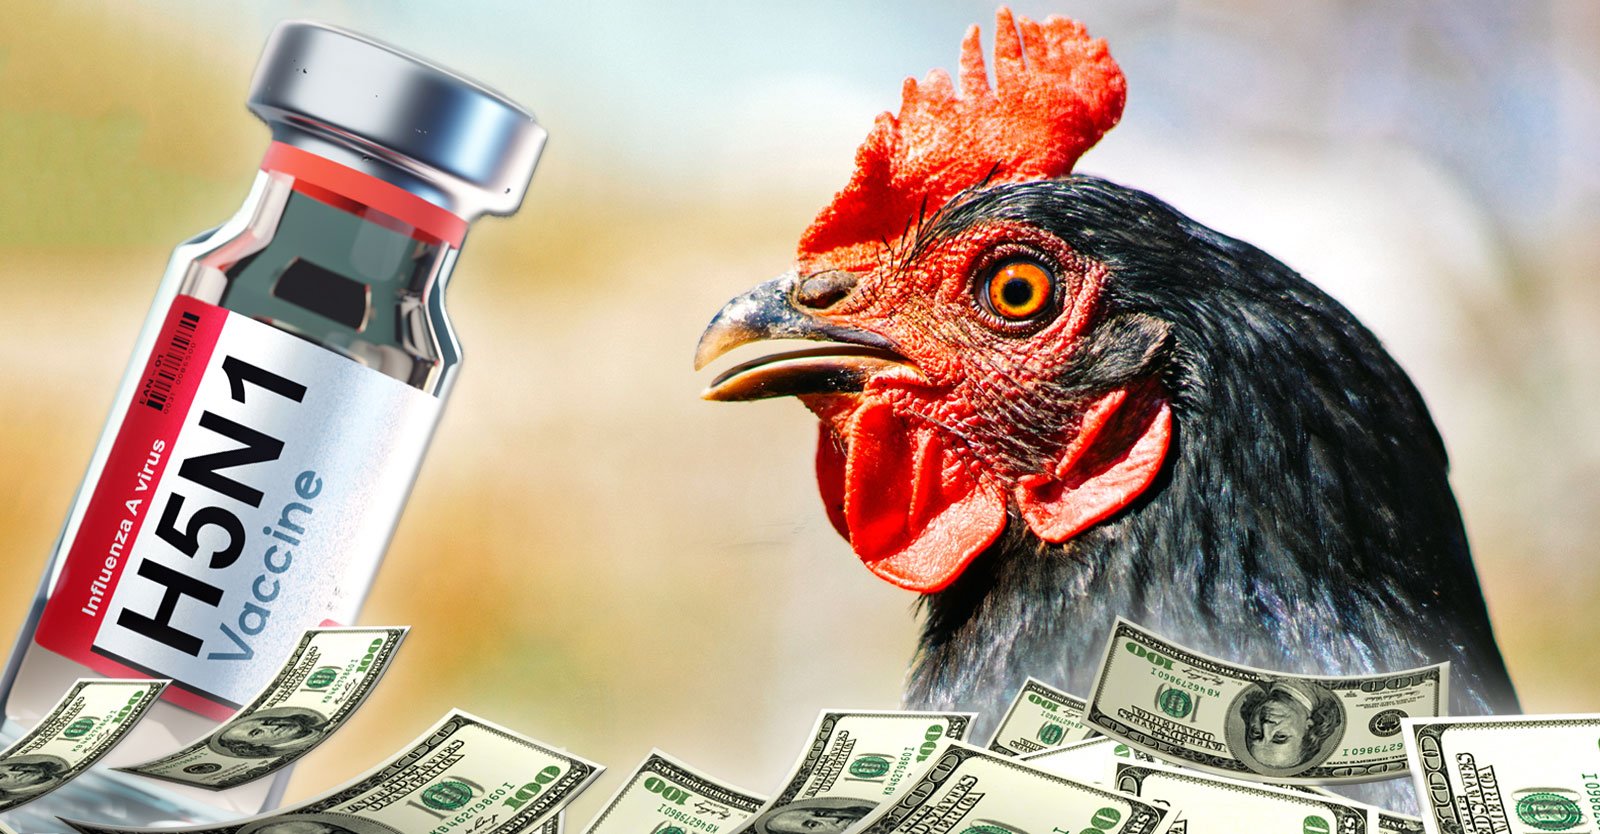 Bird Flu: Real Threat Or Profit-motivated Fearmongering?